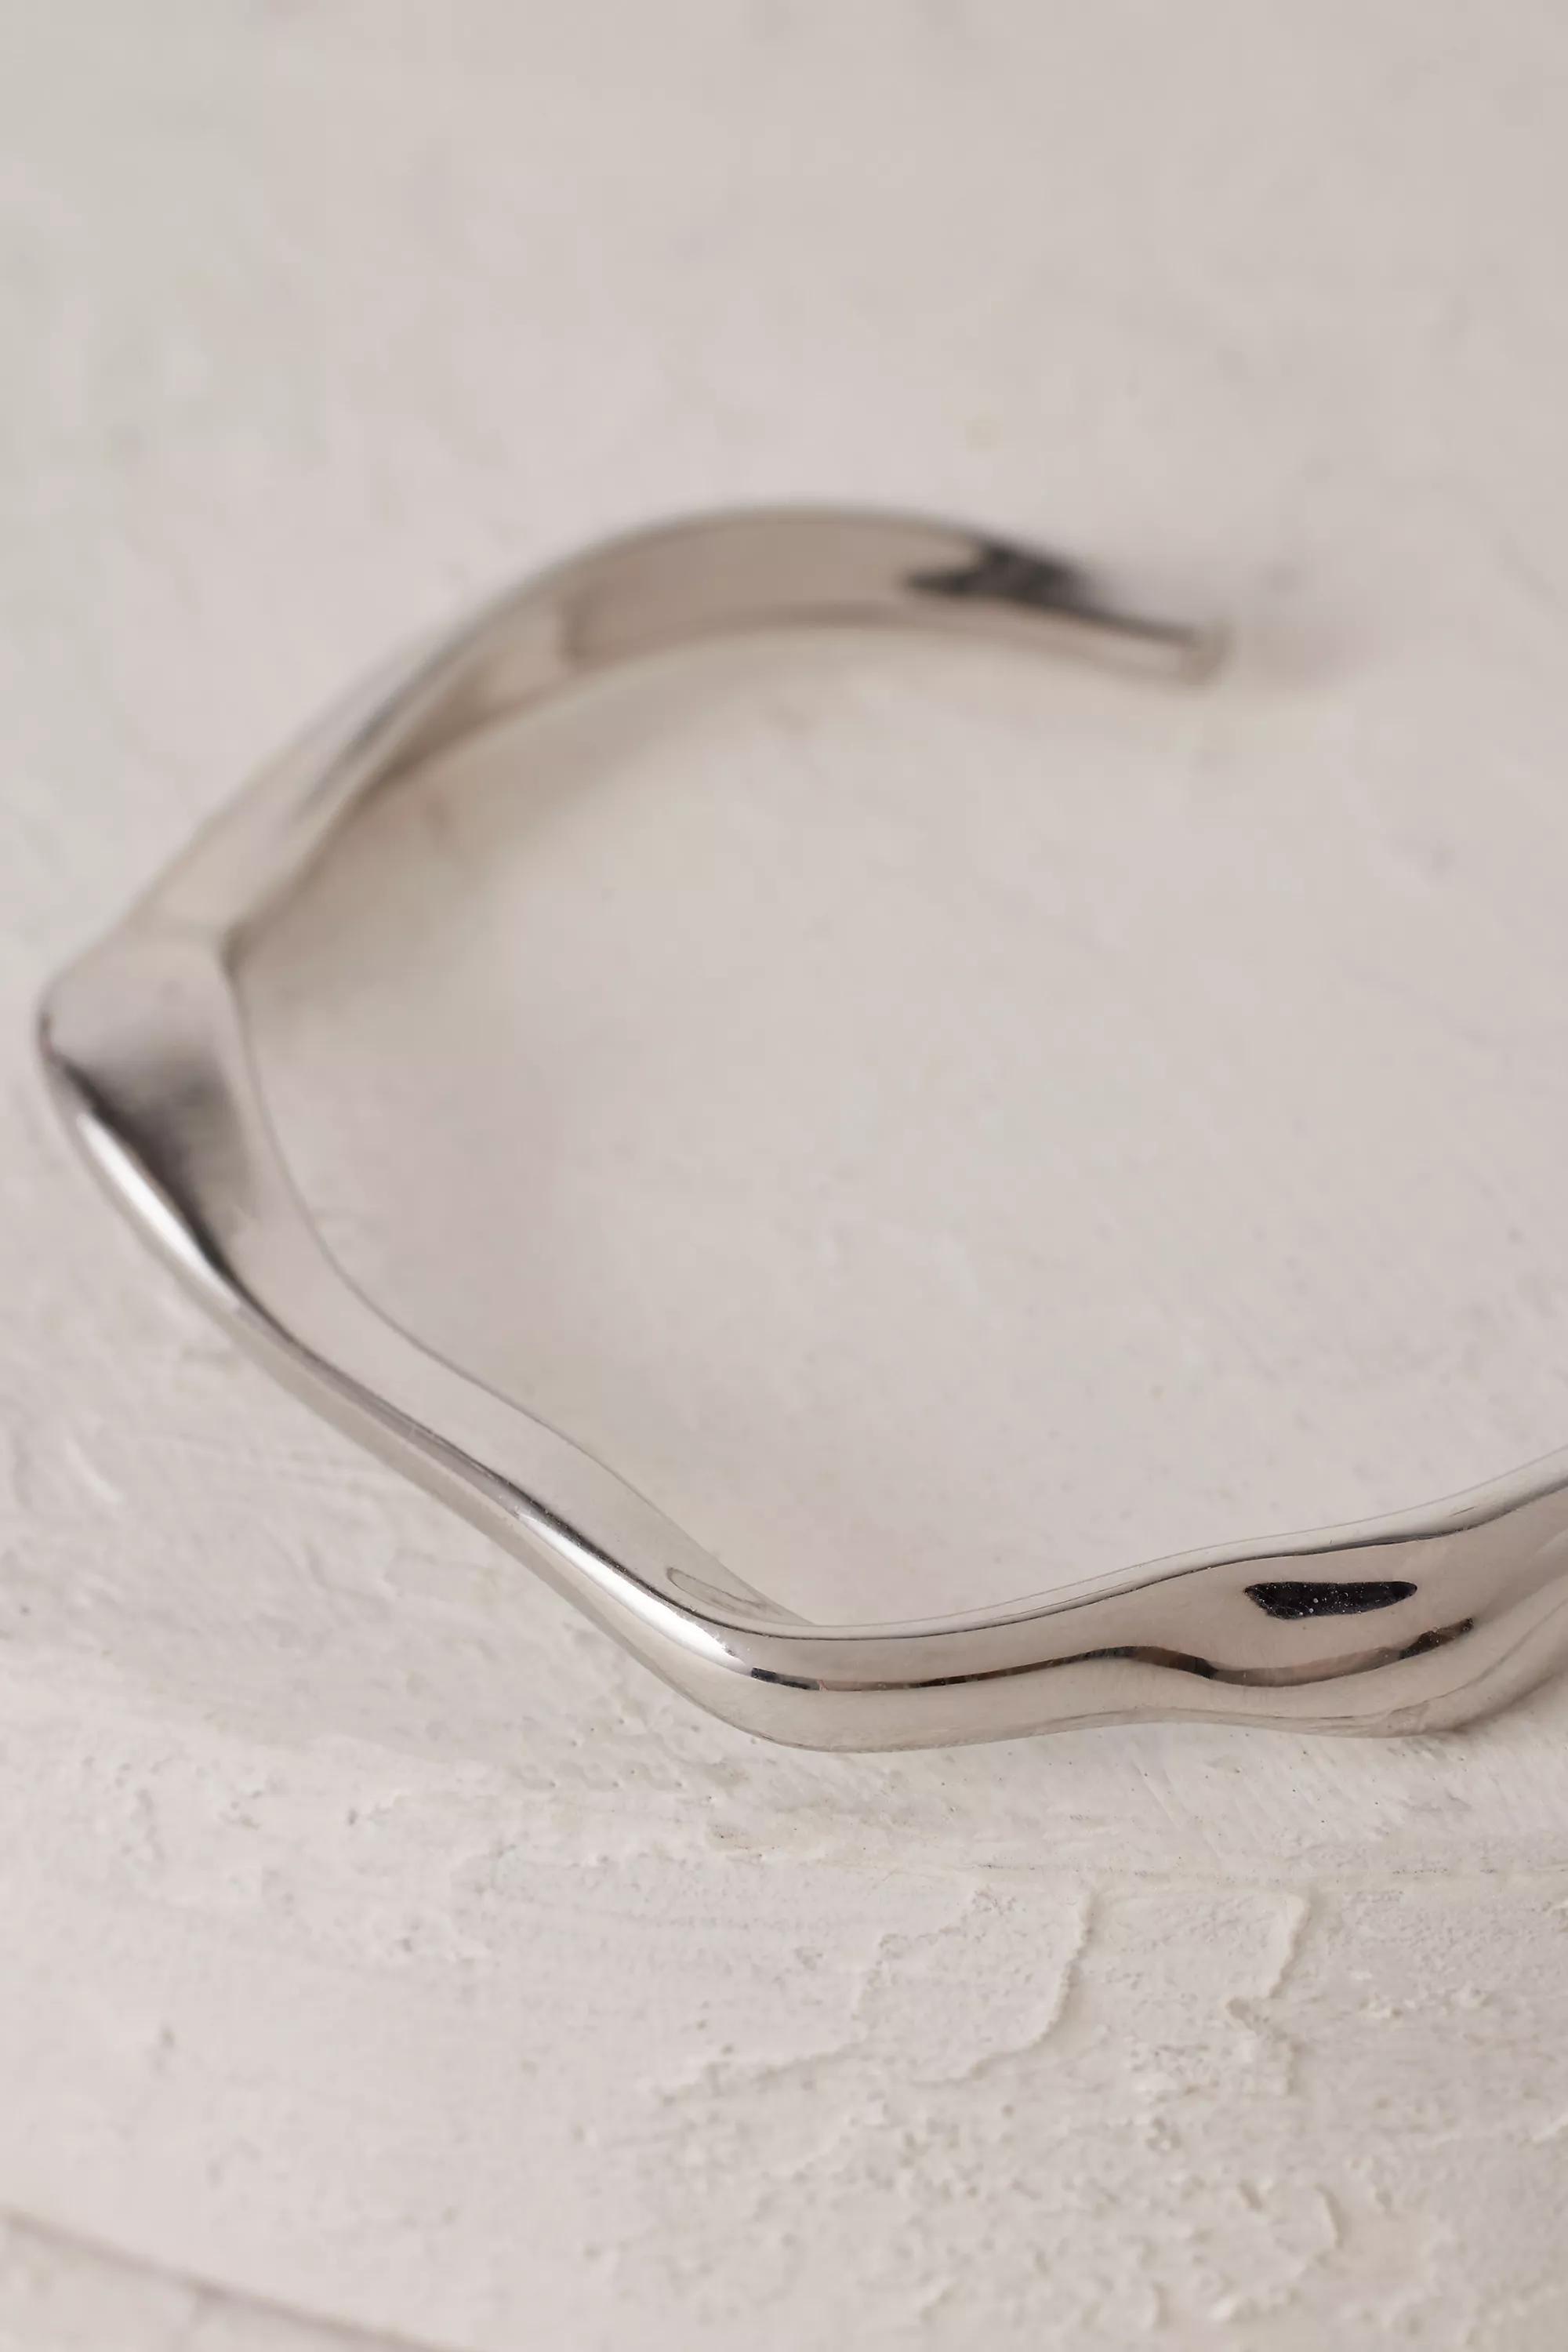 Anthropologie - Swirl Cuff Bracelet, Silver